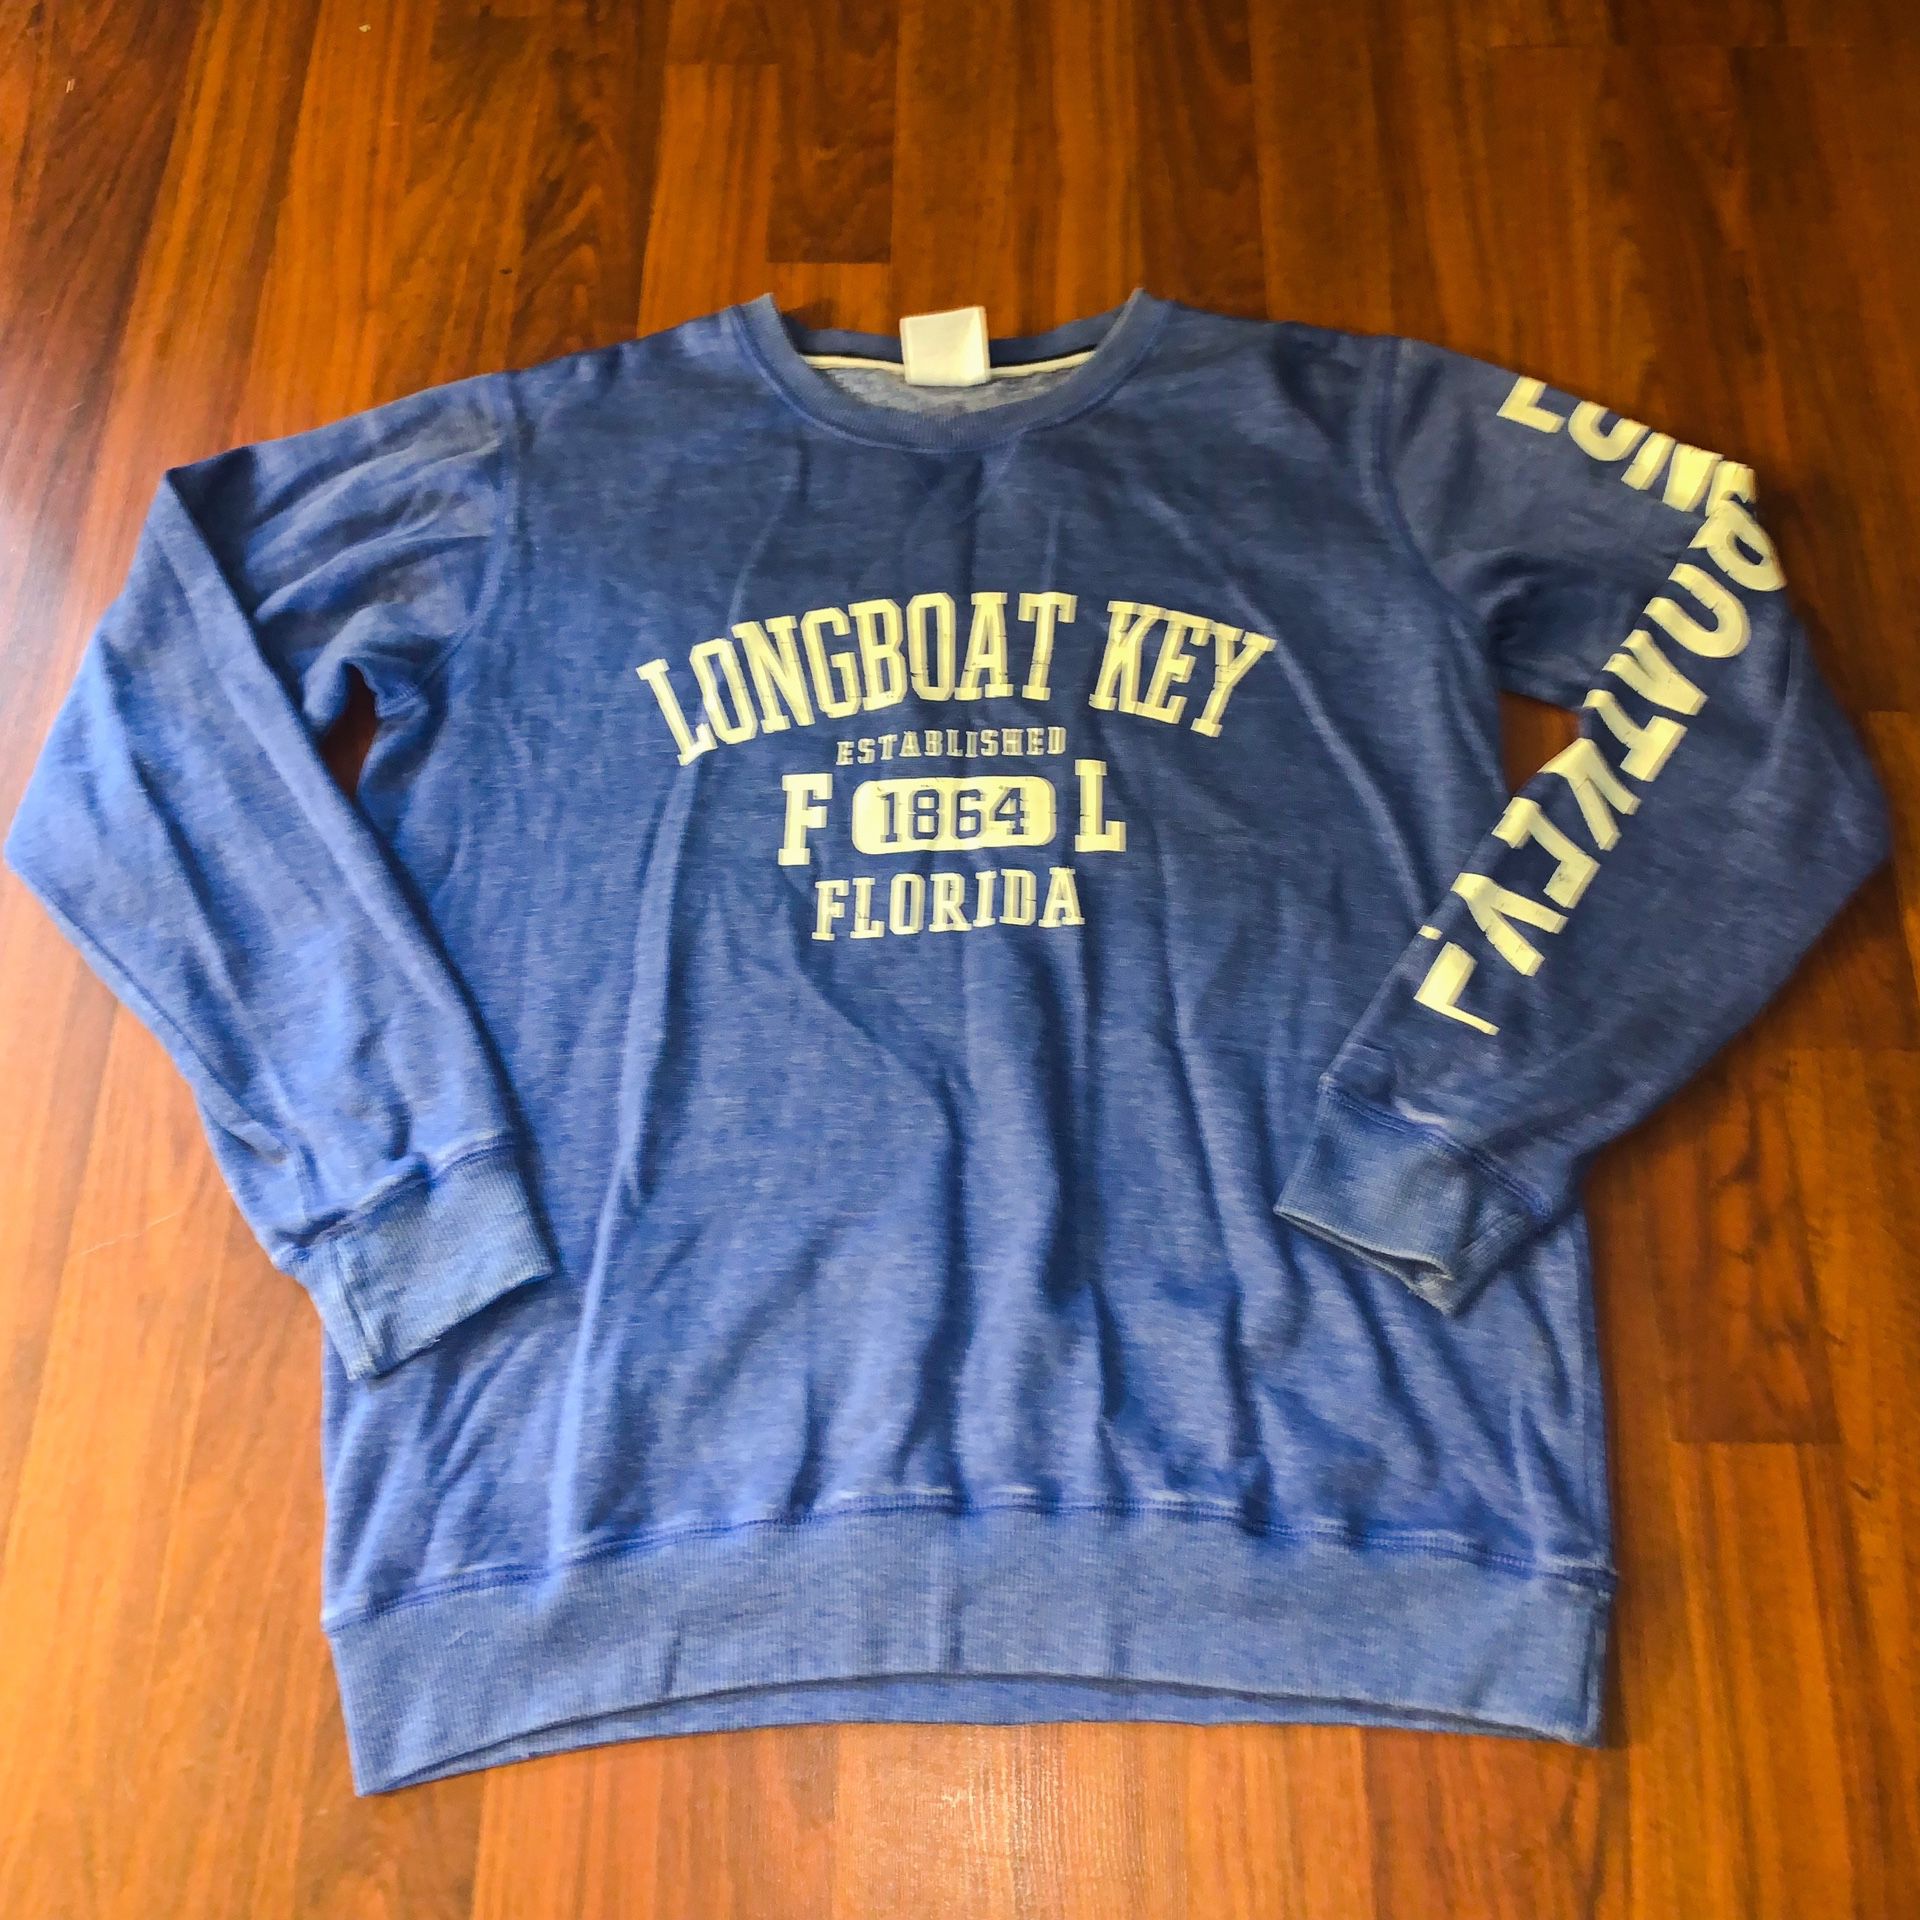 U.S. Vintage LongBoat Key, Florida Women’s Sweatshirt Size Medium *SHIPPING ONLY*